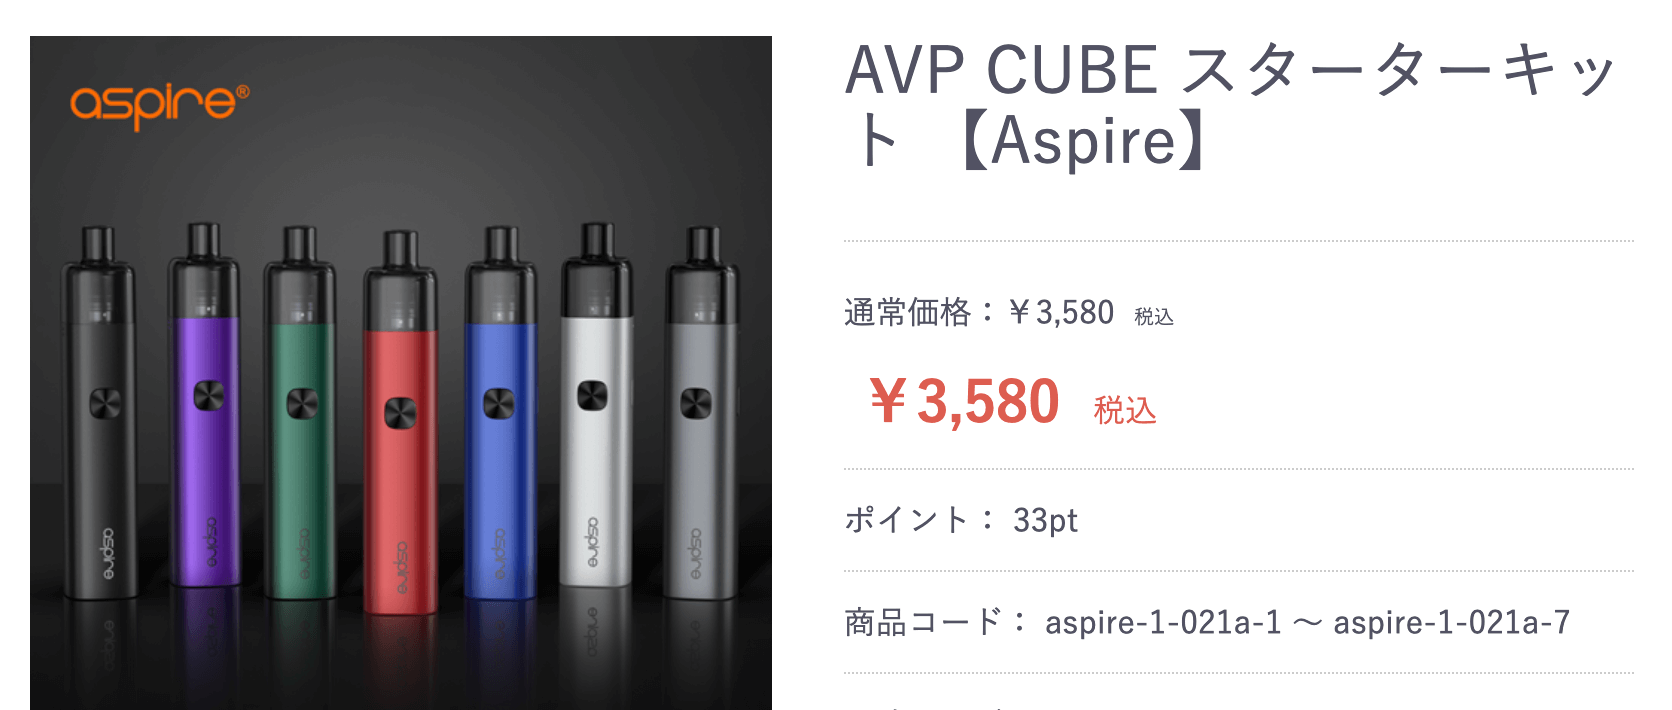 AVP CUBEの販売ページ